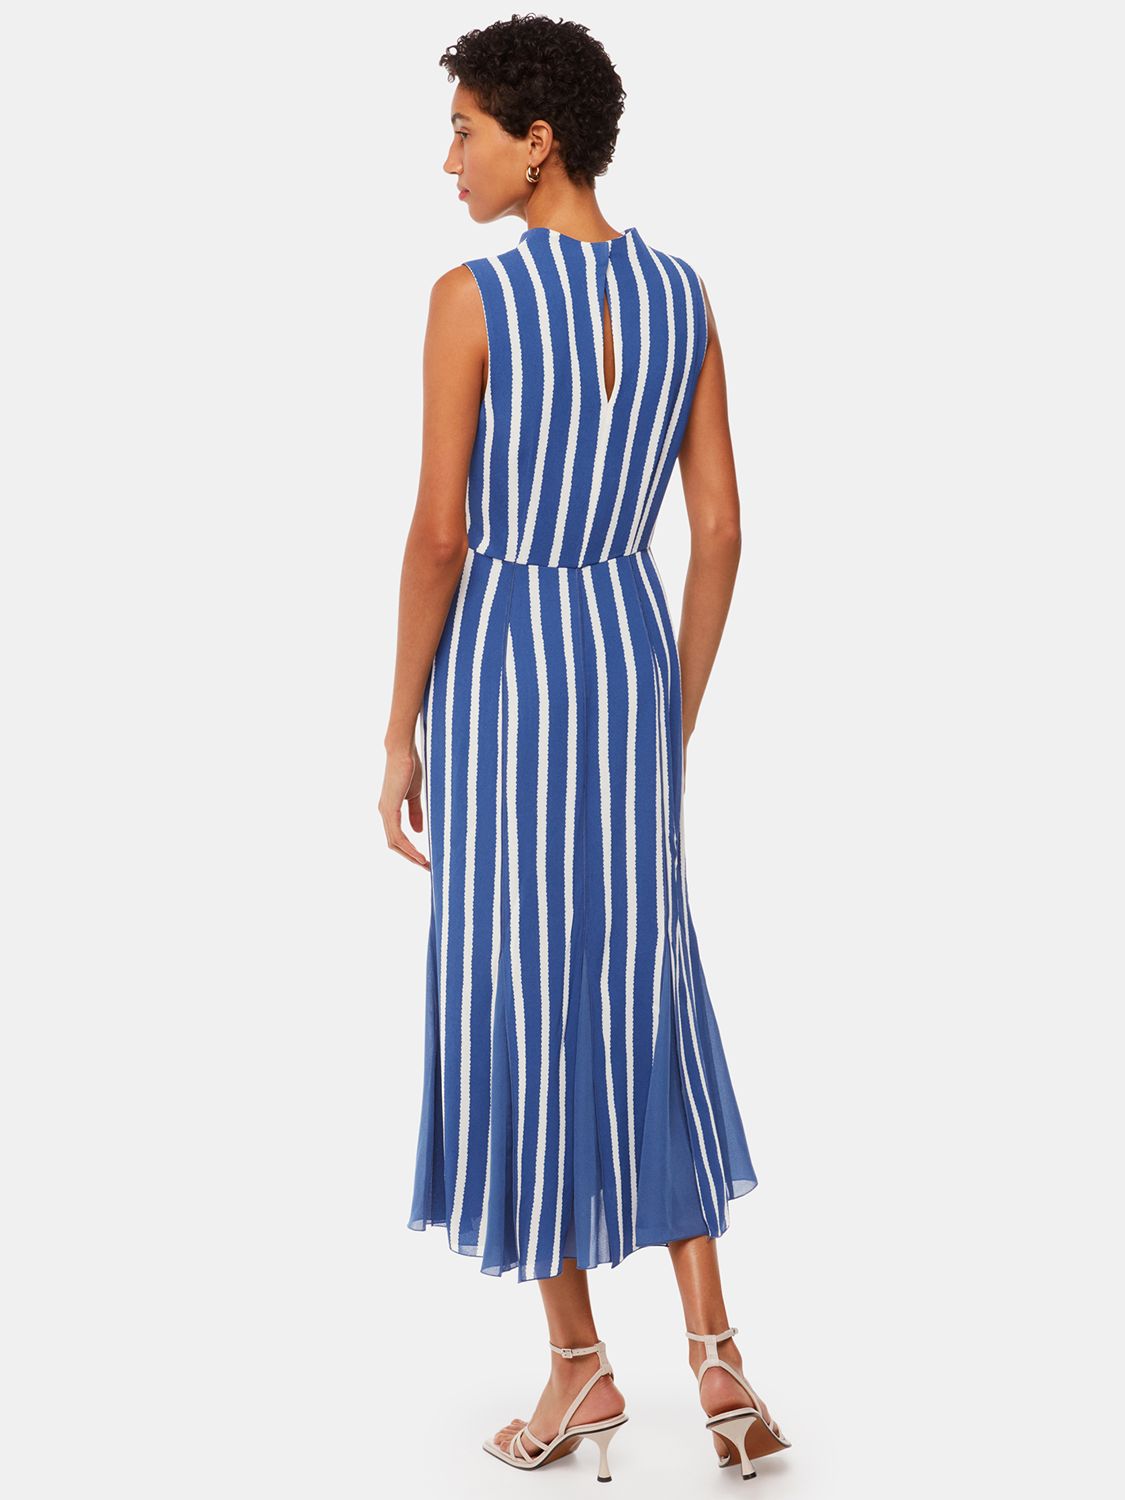 Whistles Crinkle Stripe Midi Dress, Blue/White, 6